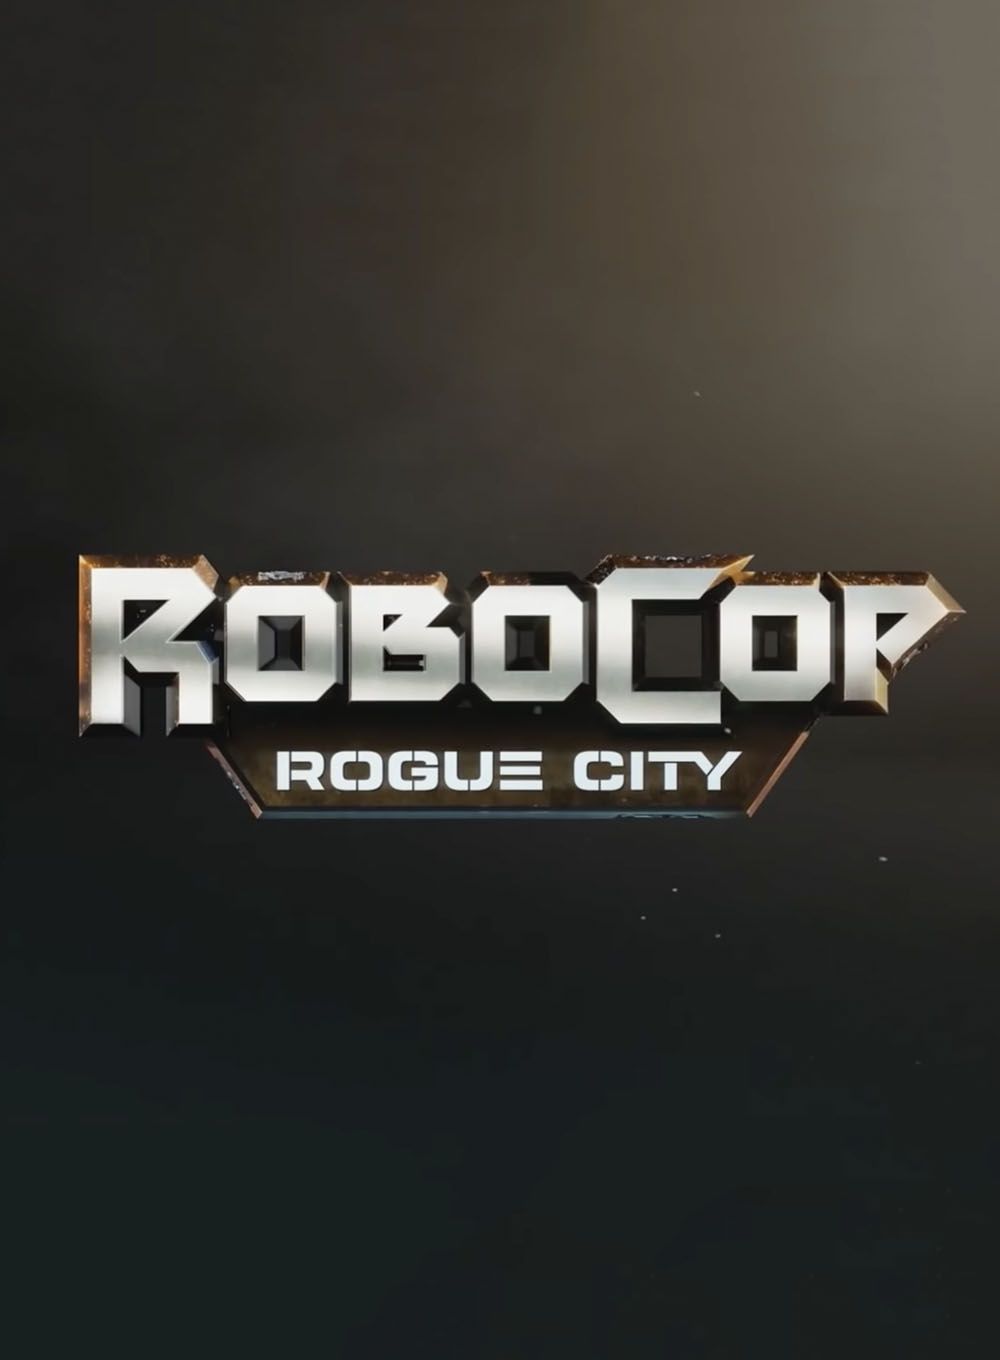 RoboCop: Rogue City download the last version for apple